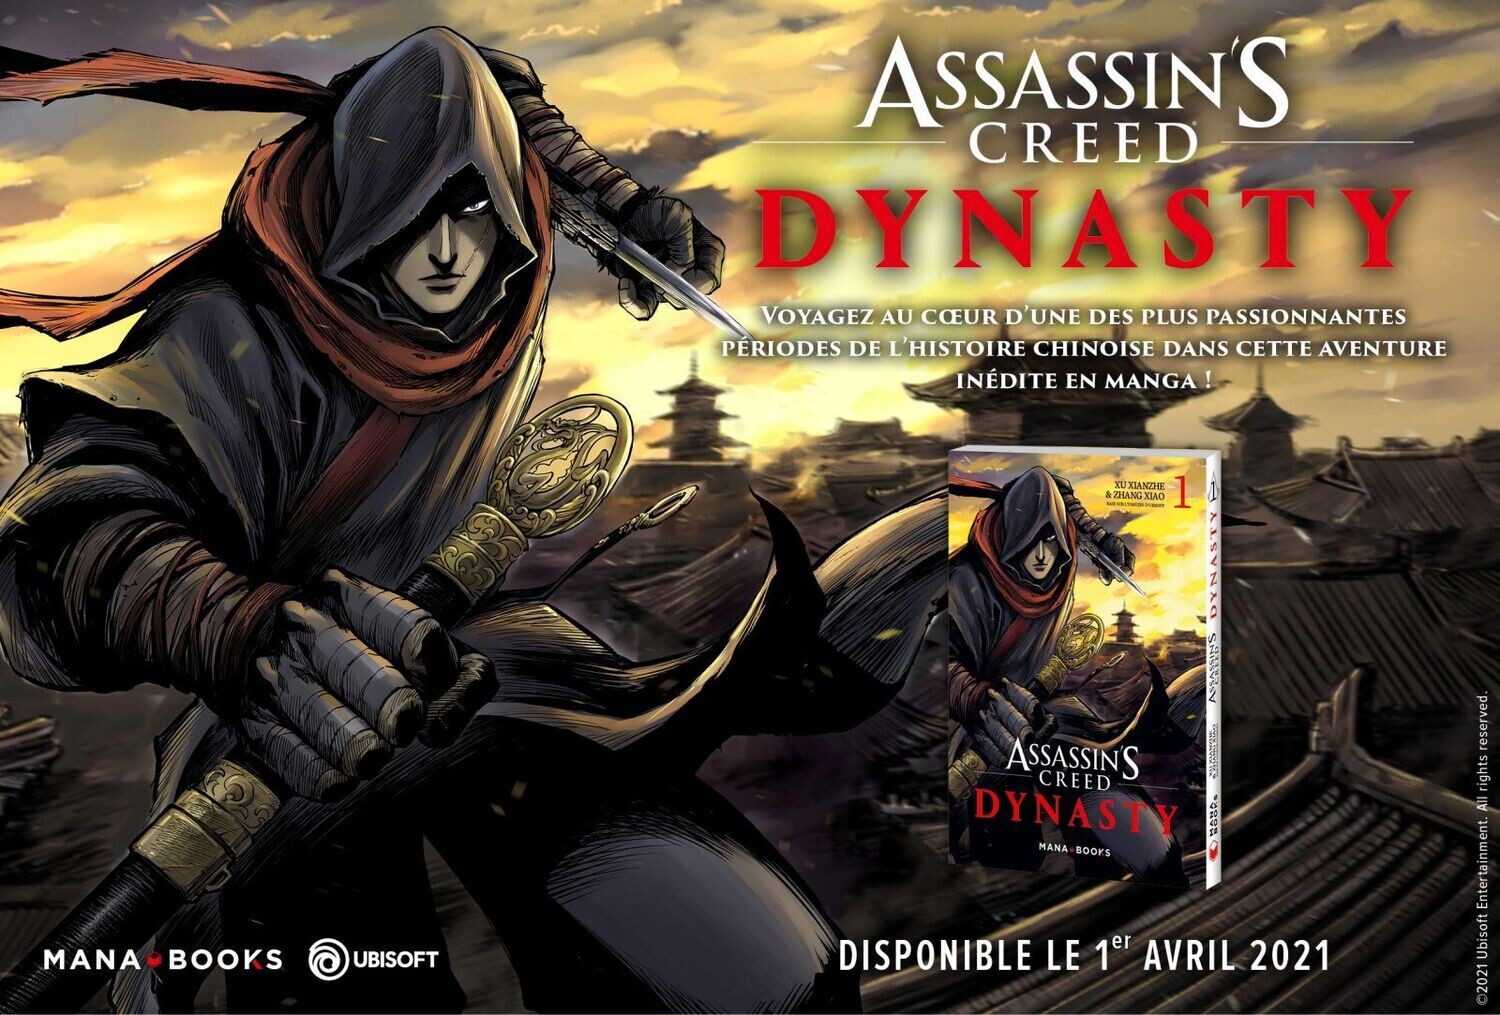 Assassin's Creed Dynasty Vol. 1